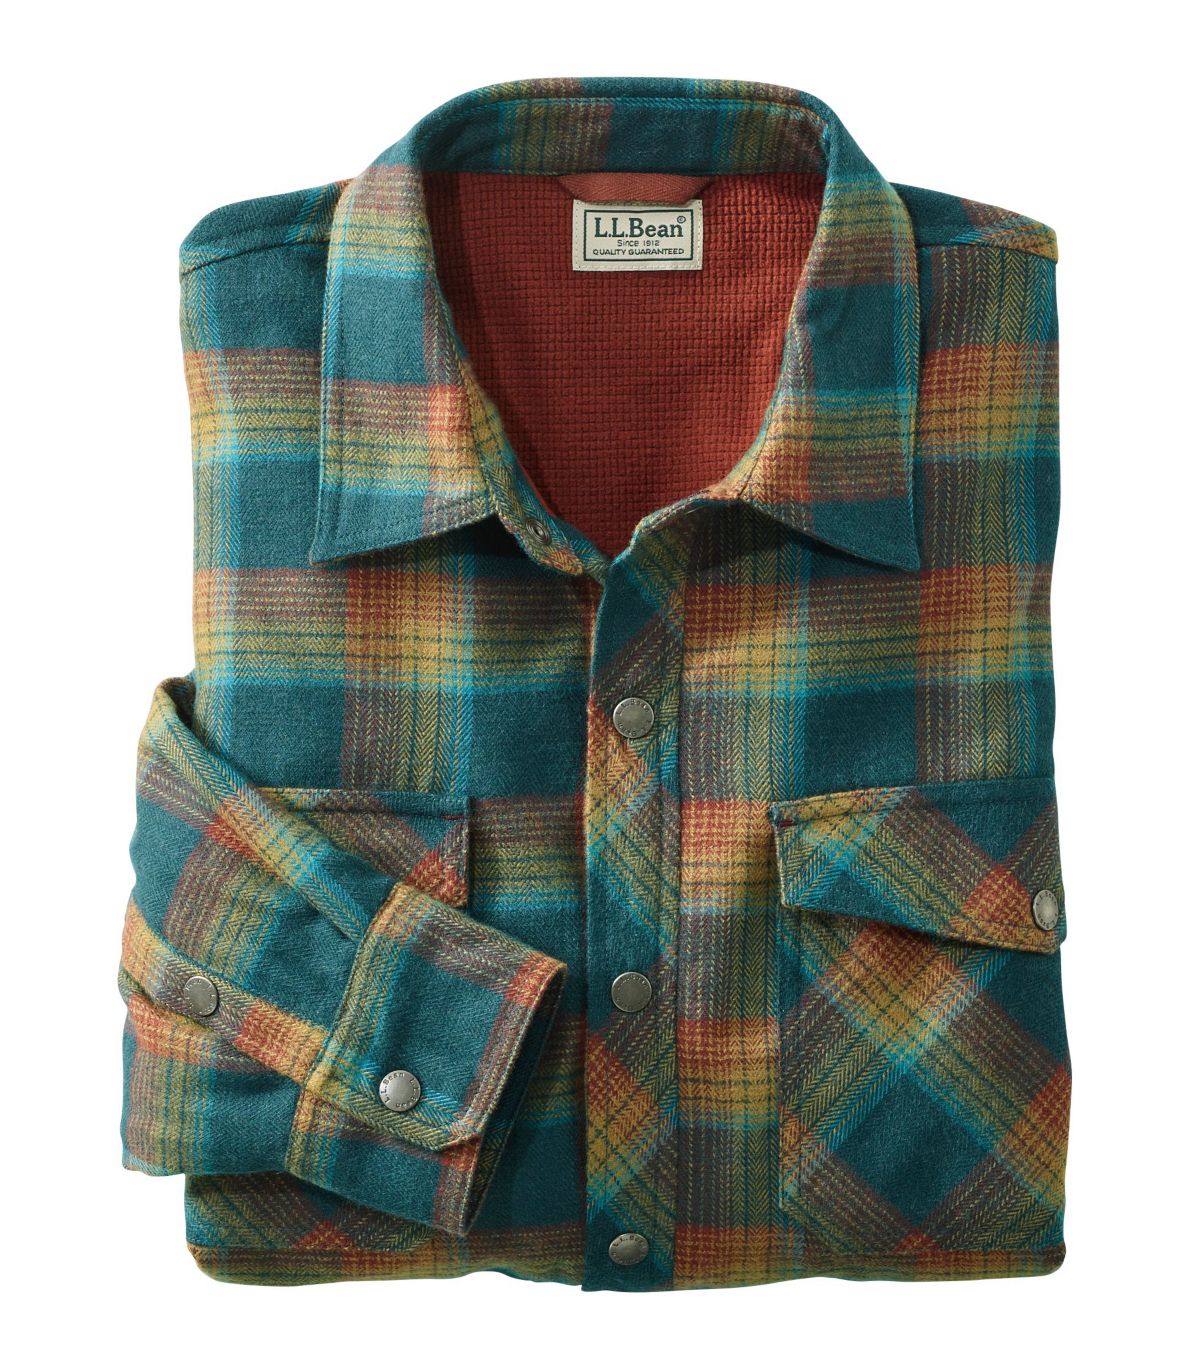 Men's Overland Performance Flannel Shirt, Fleece Lined at L.L. Bean